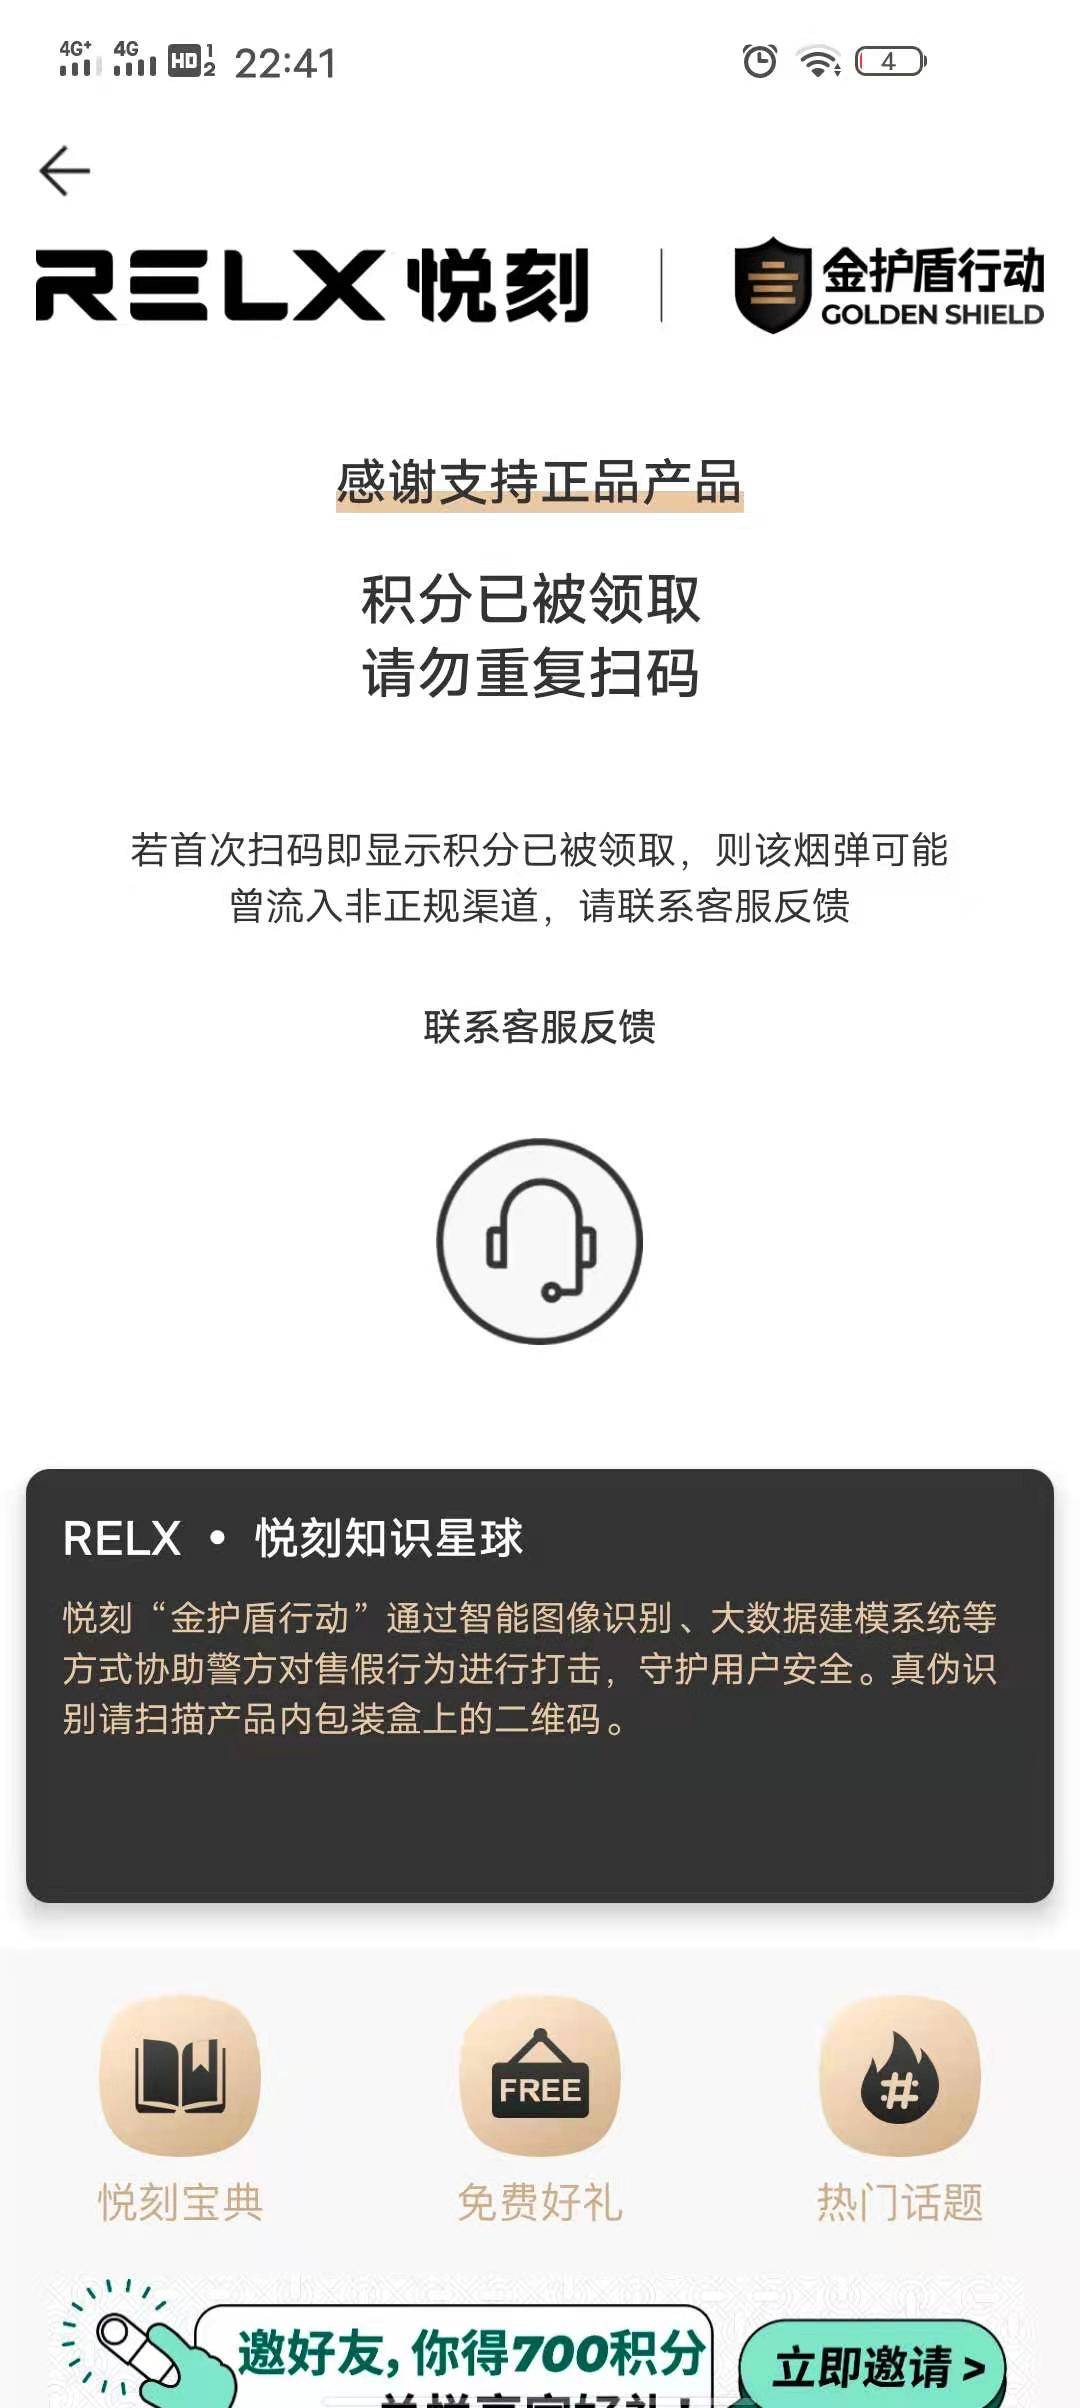 relx悦刻电子烟真假鉴别 - 第2张